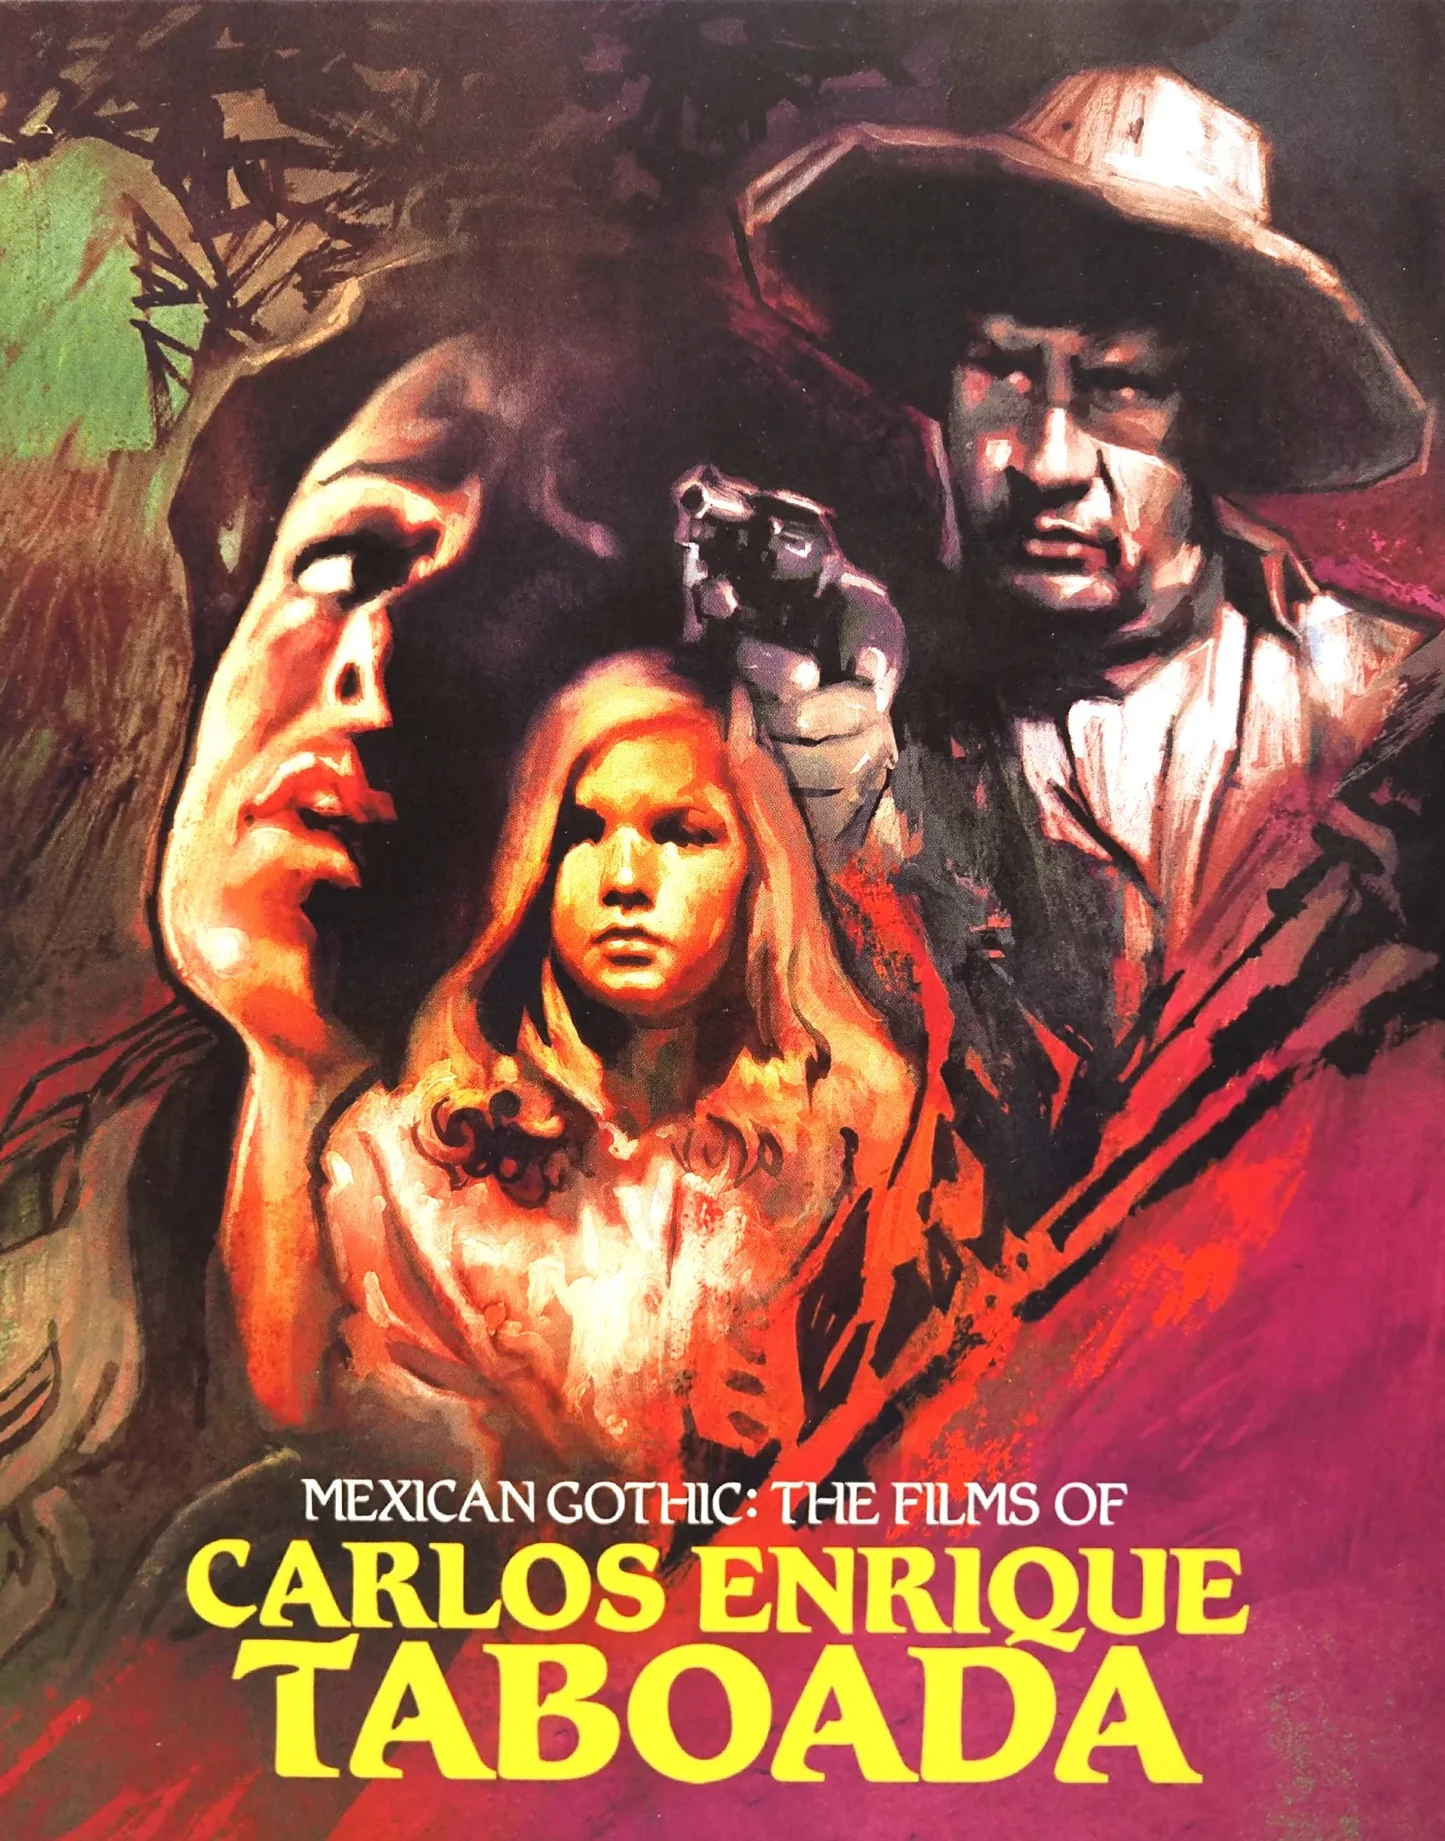 Mexican Gothic: The Films of Carlos Enrique Taboada [Hardbox / 2 Disc]